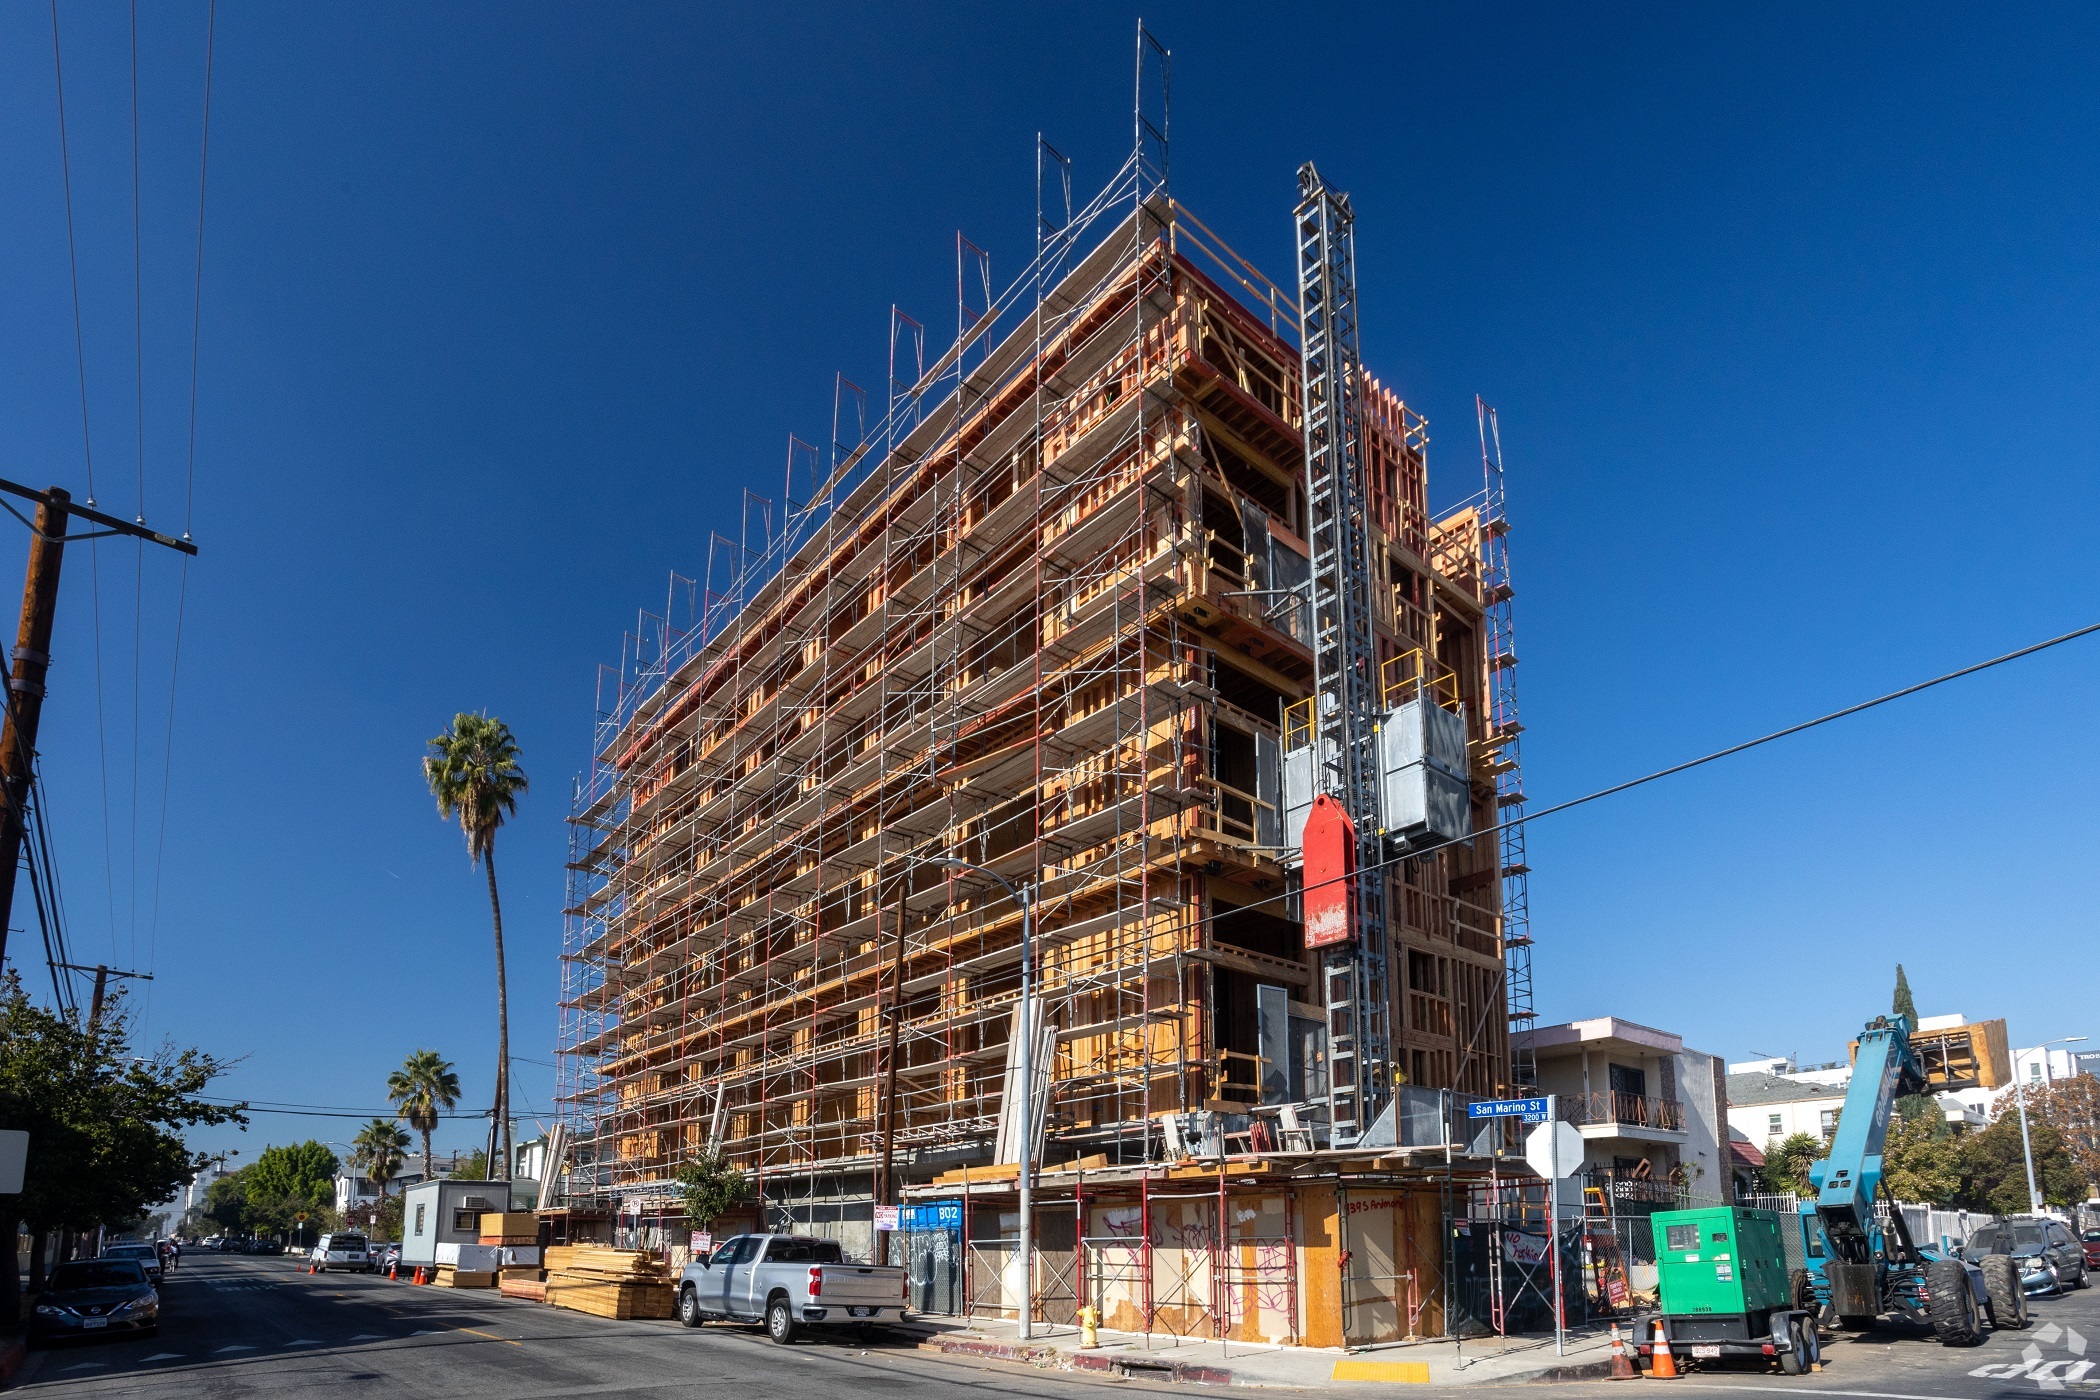 West Coast Cities Slam Brakes on Housing Production Amid Worsening Crisis